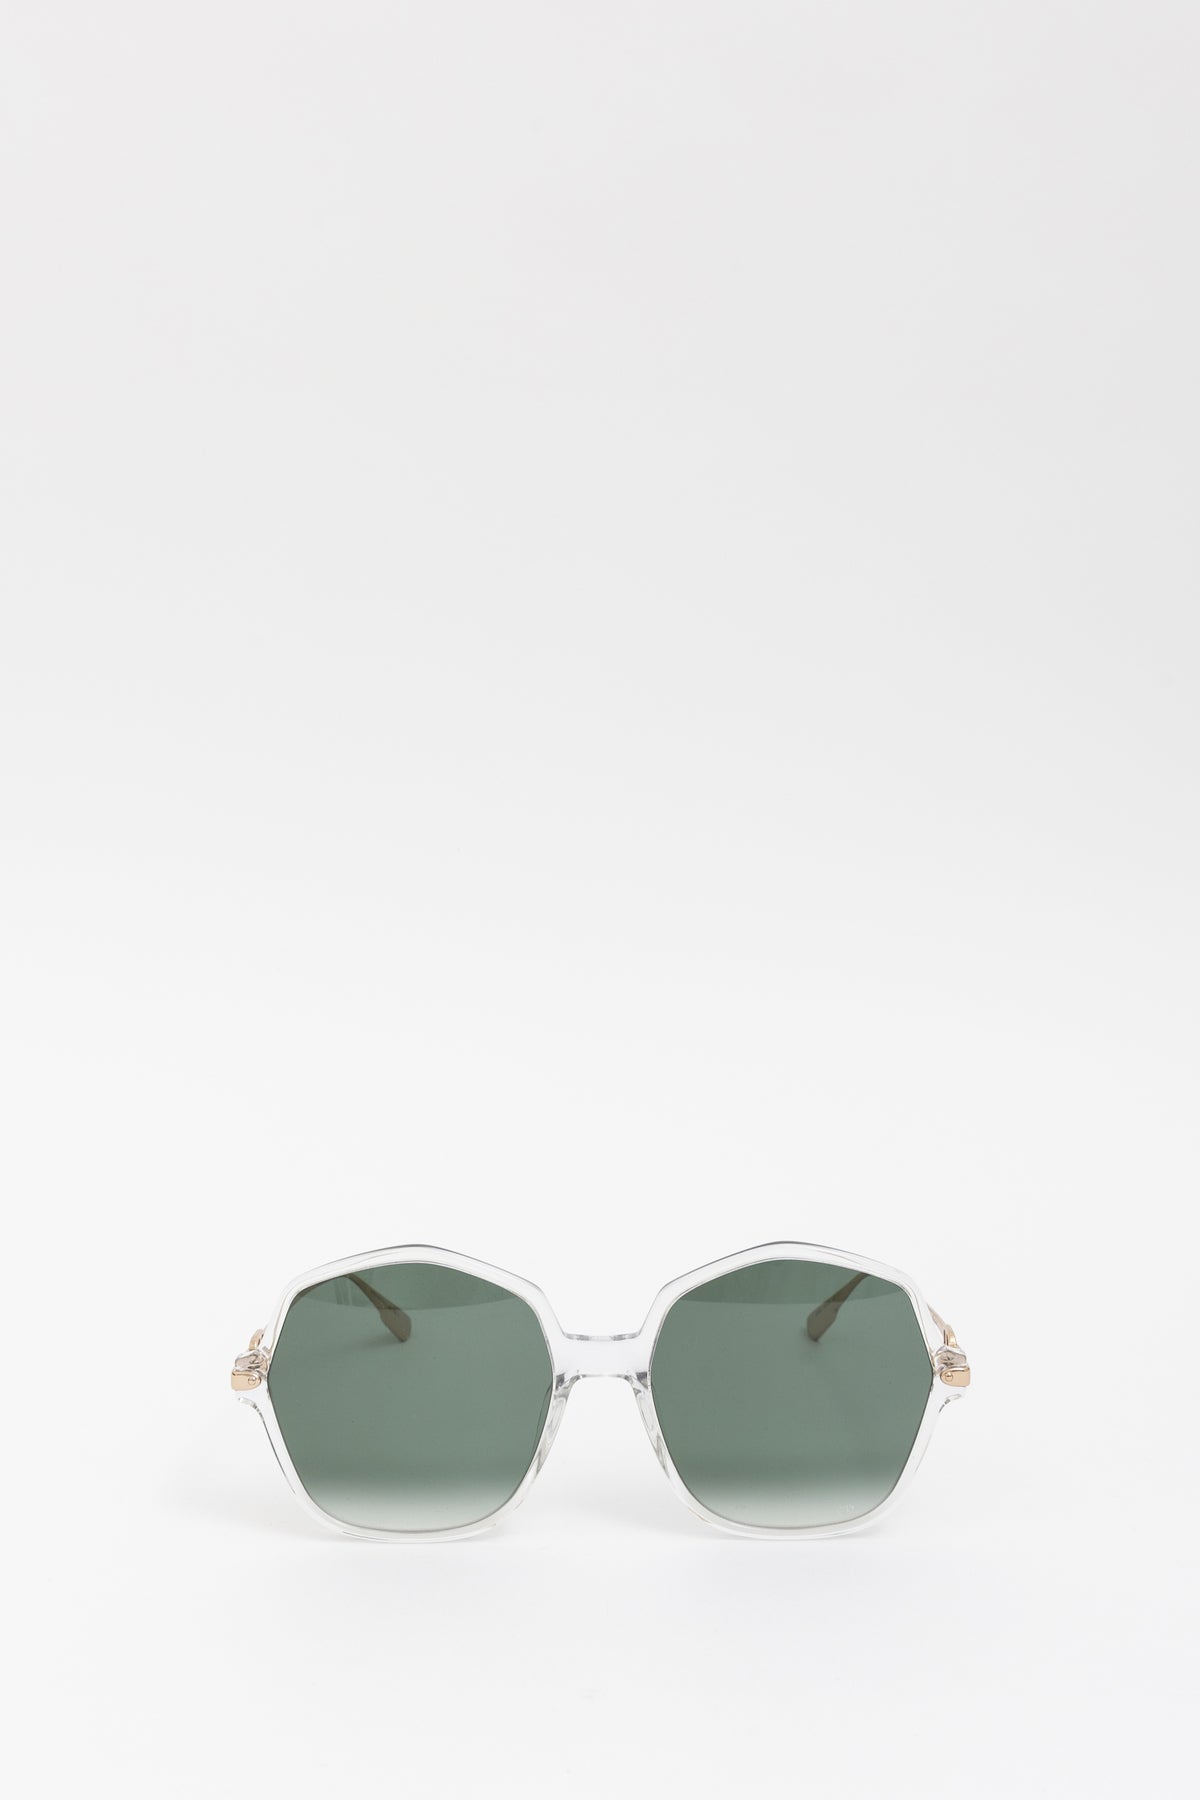 DiorLink2 Sunglasses